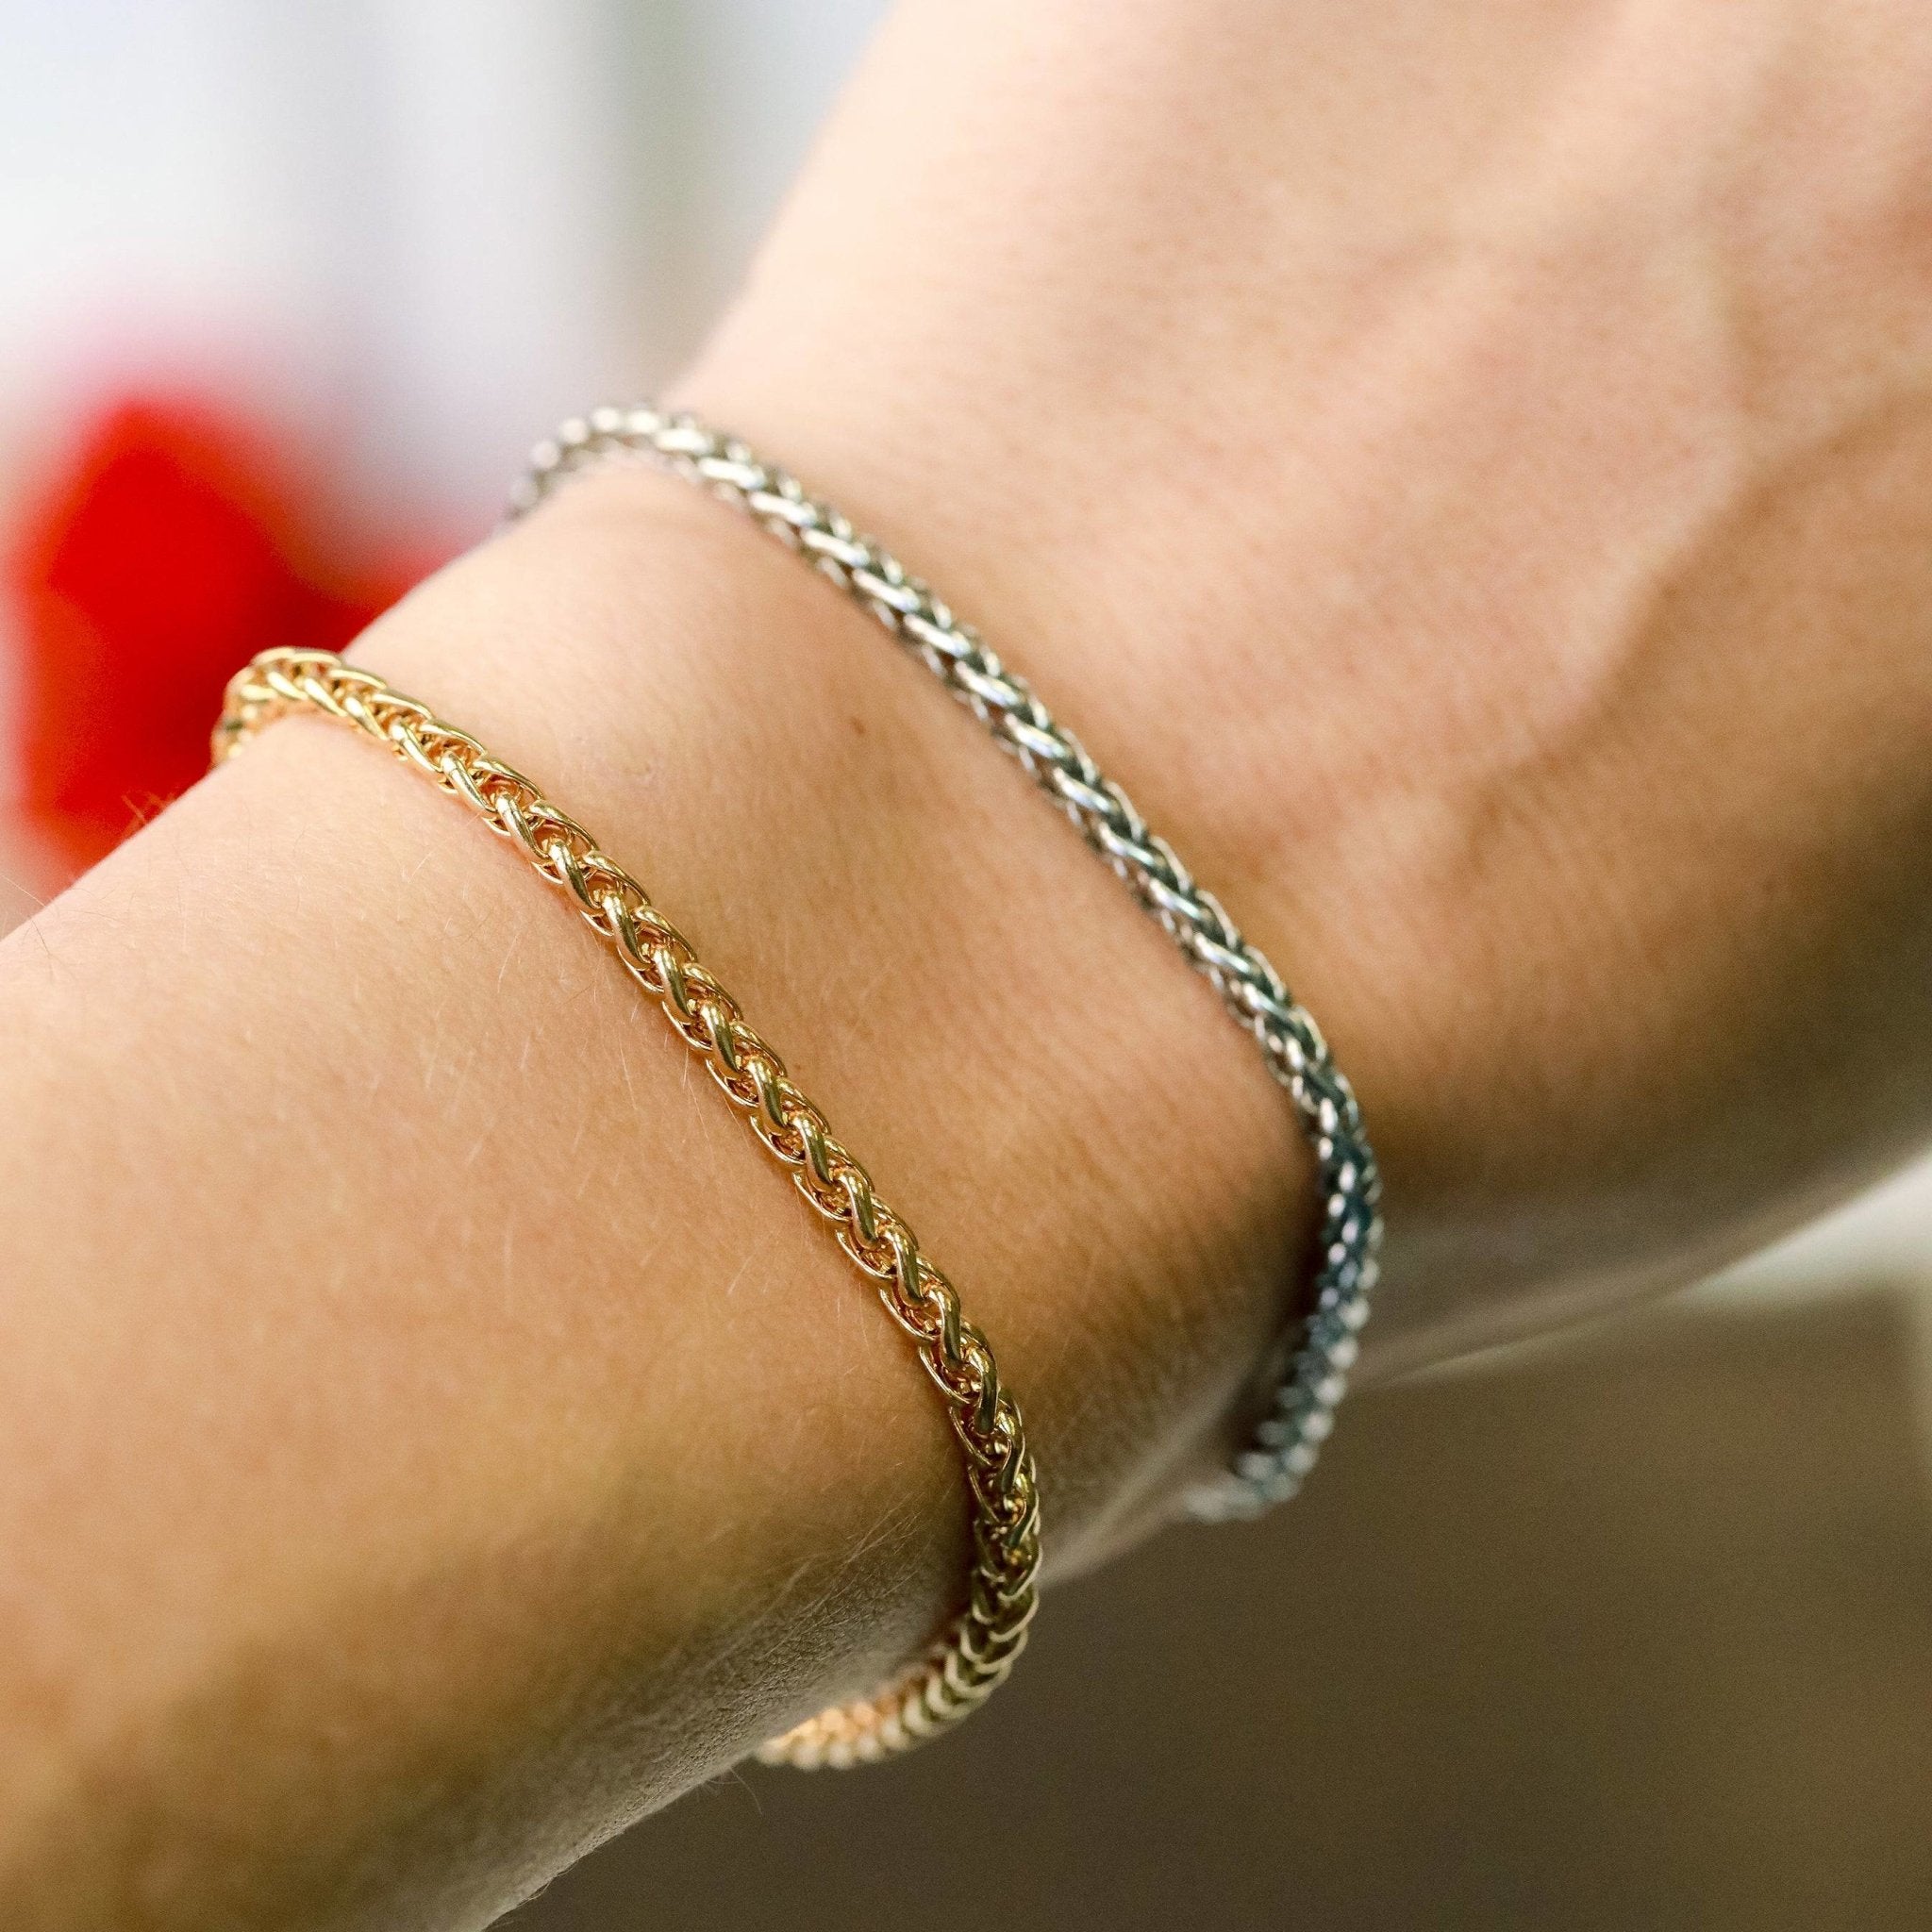 Generic Dragon Bracelet Gold 7.48 Inches @ Best Price Online | Jumia Egypt